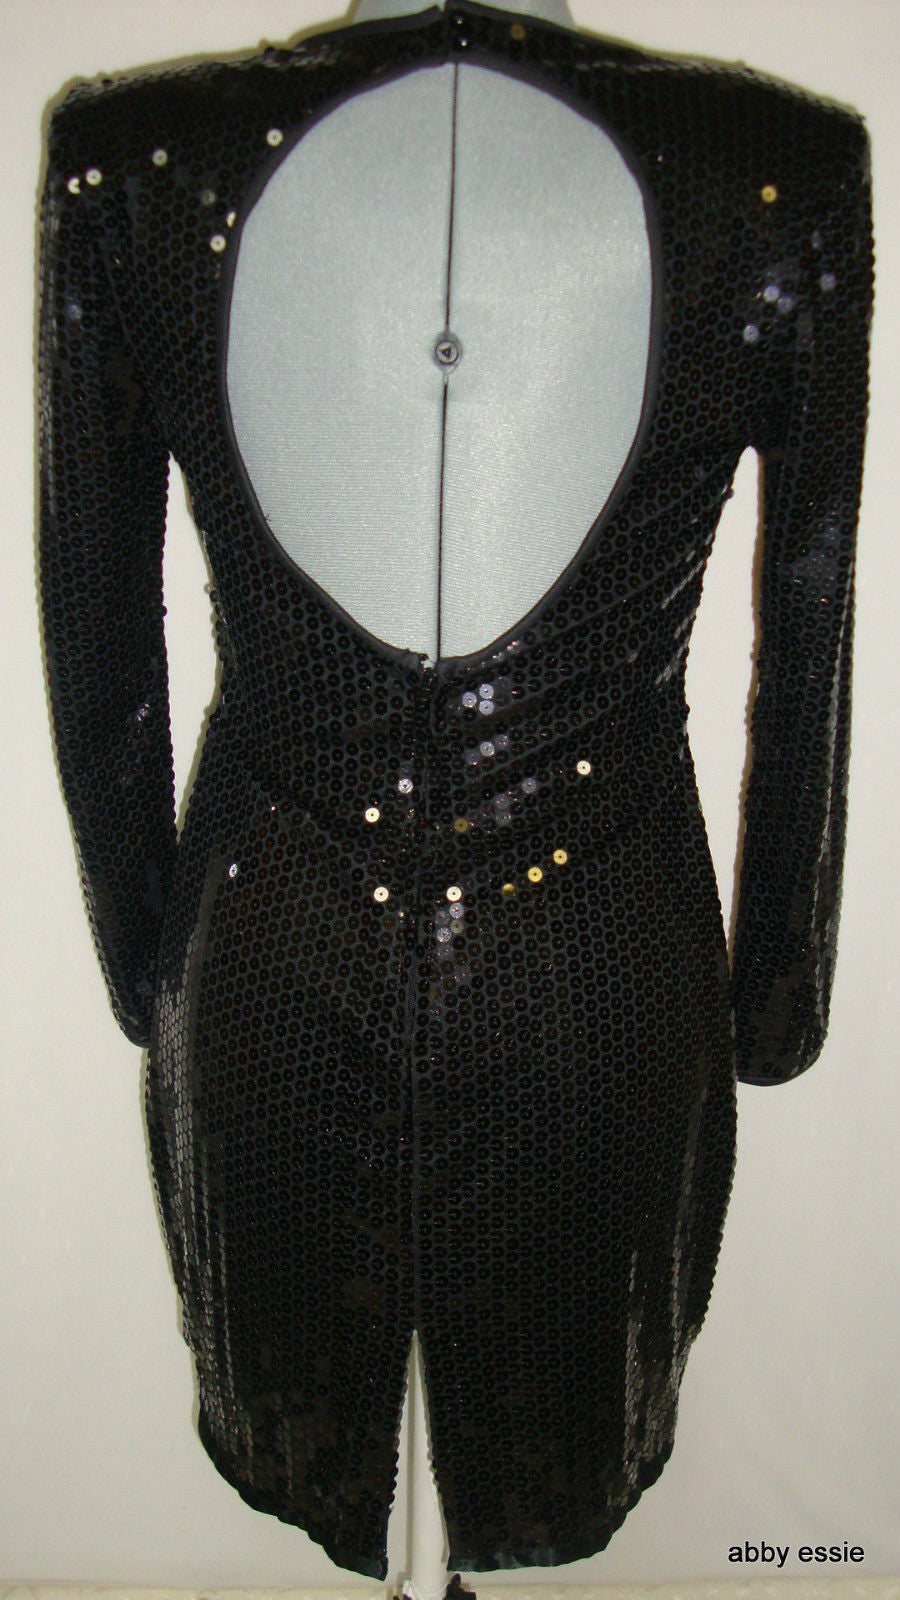 Vintage Black Sequin Stretch Open Back Wiggle Cocktail Dress 10 Medium Ld-2428 Abby Essie